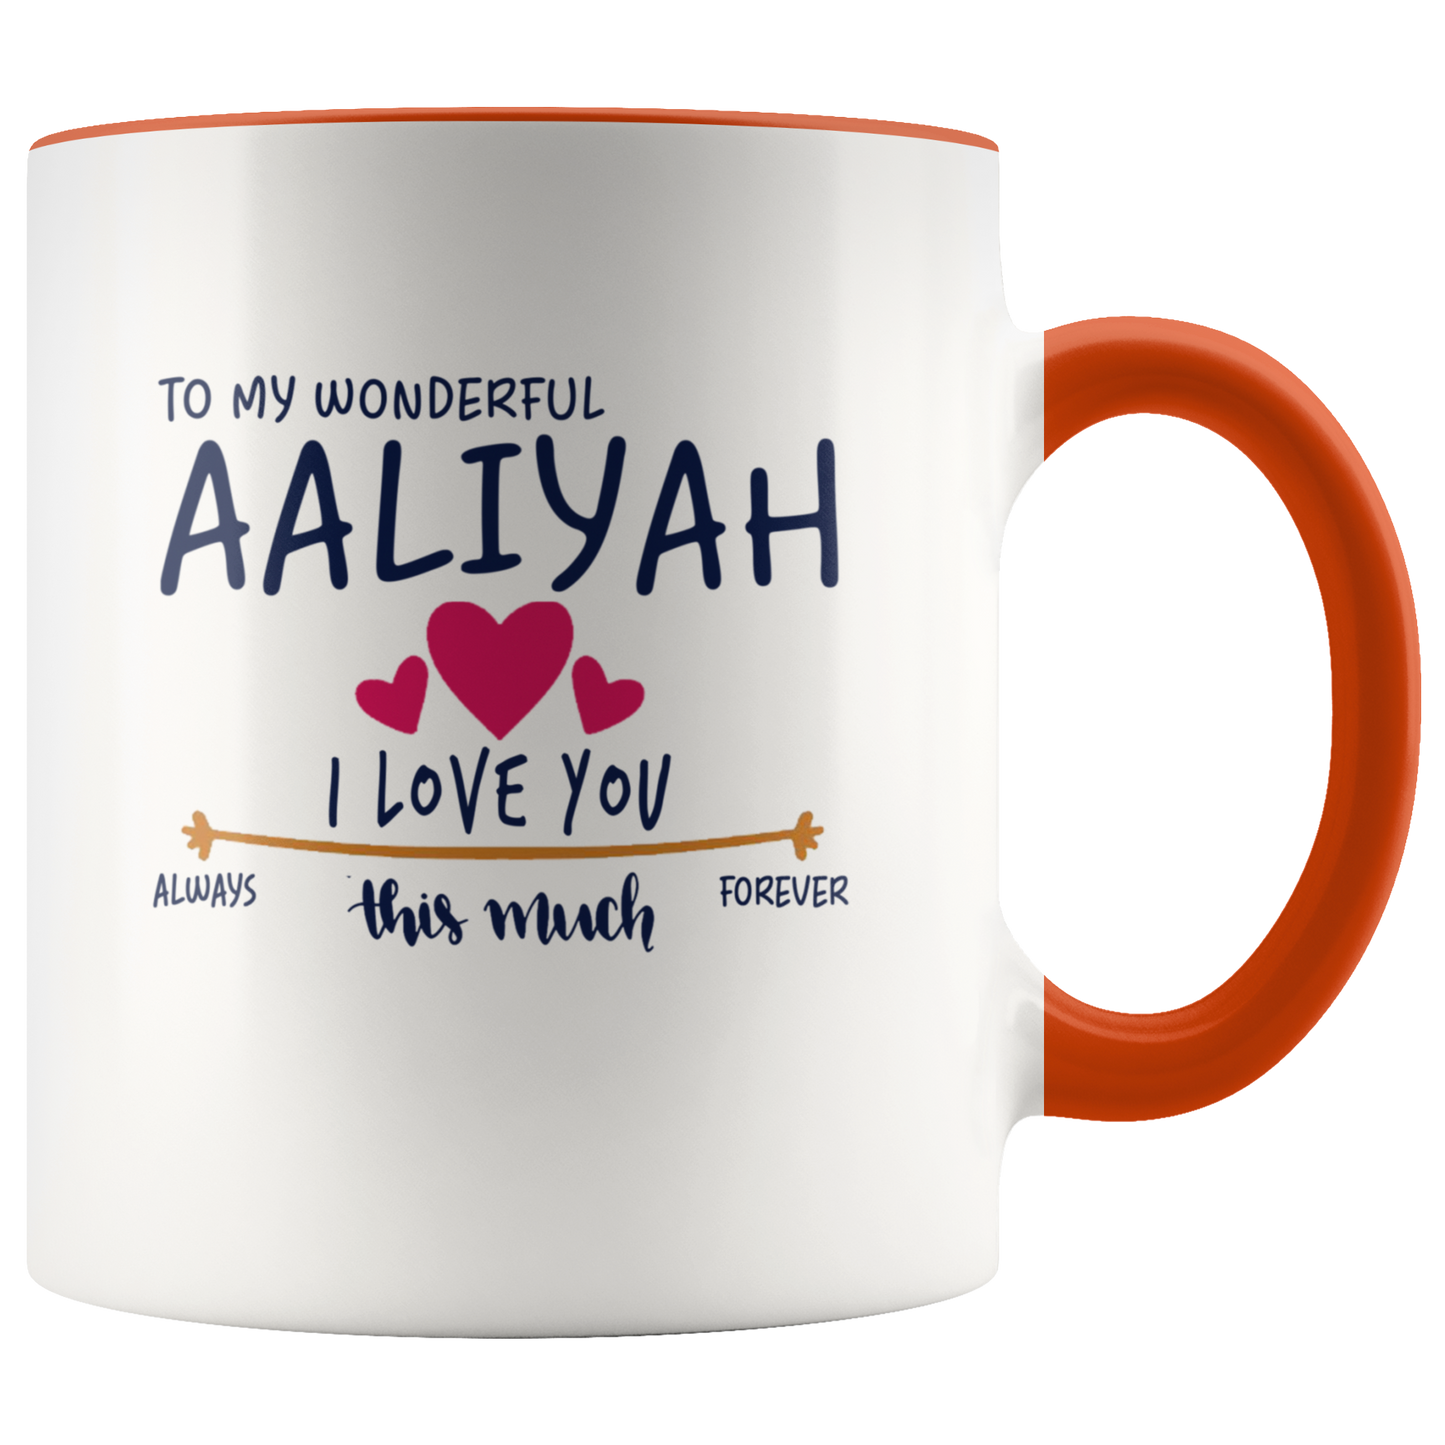 M-21259969-sp-23480 - Valentines Day Coffee Mug With Name Aaliyah - To My Wonderfu